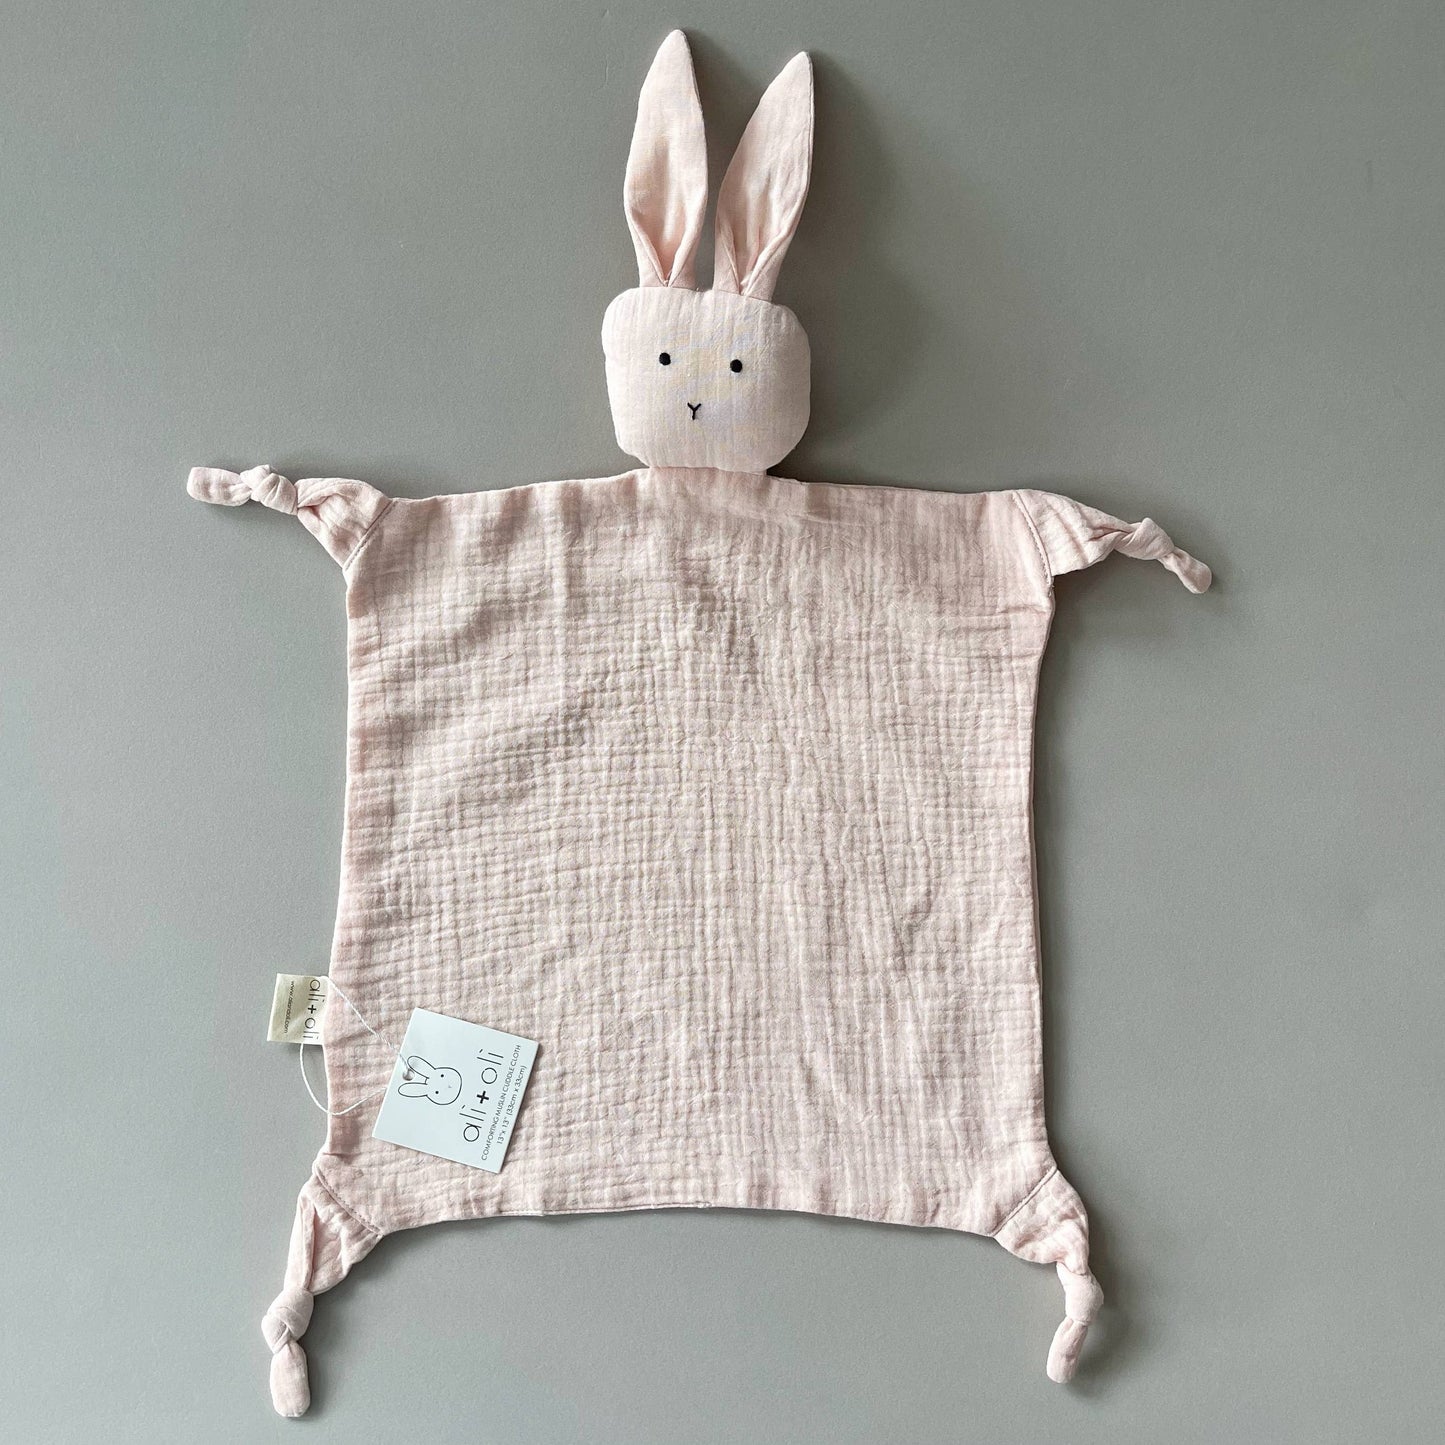 Ali & Oli Cuddle Security Blanket Soft Muslin Cotton - Bunny (Pink)